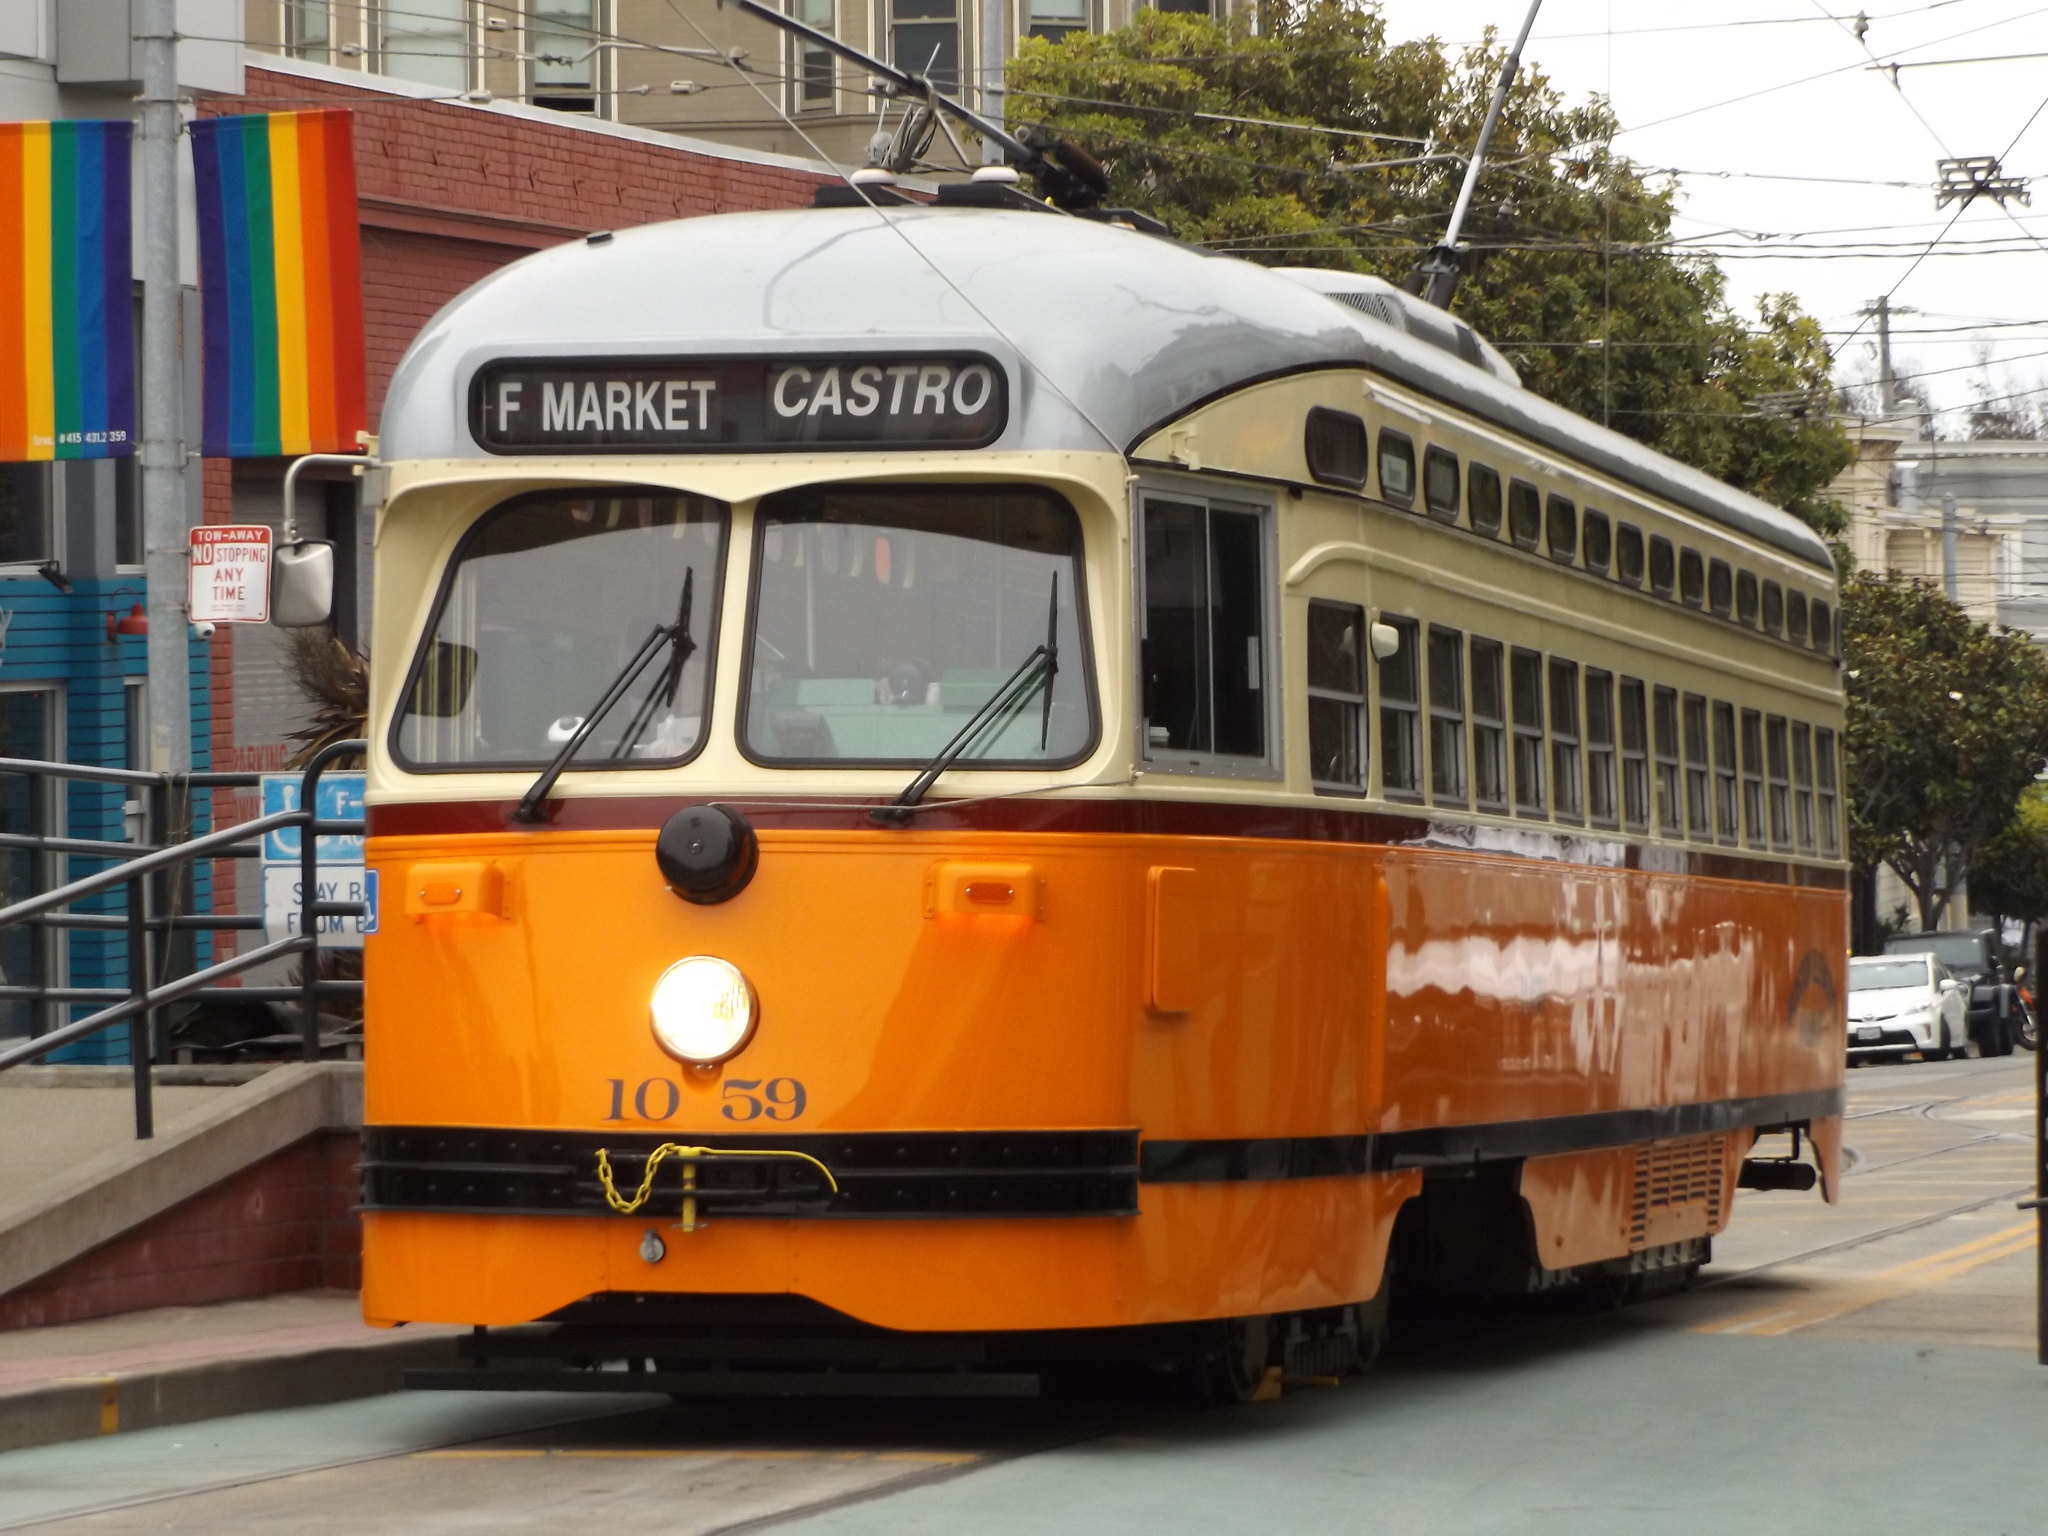 Historic Streetcar 1059 at Castro, San Francisco, California, USA, 6 September 2018